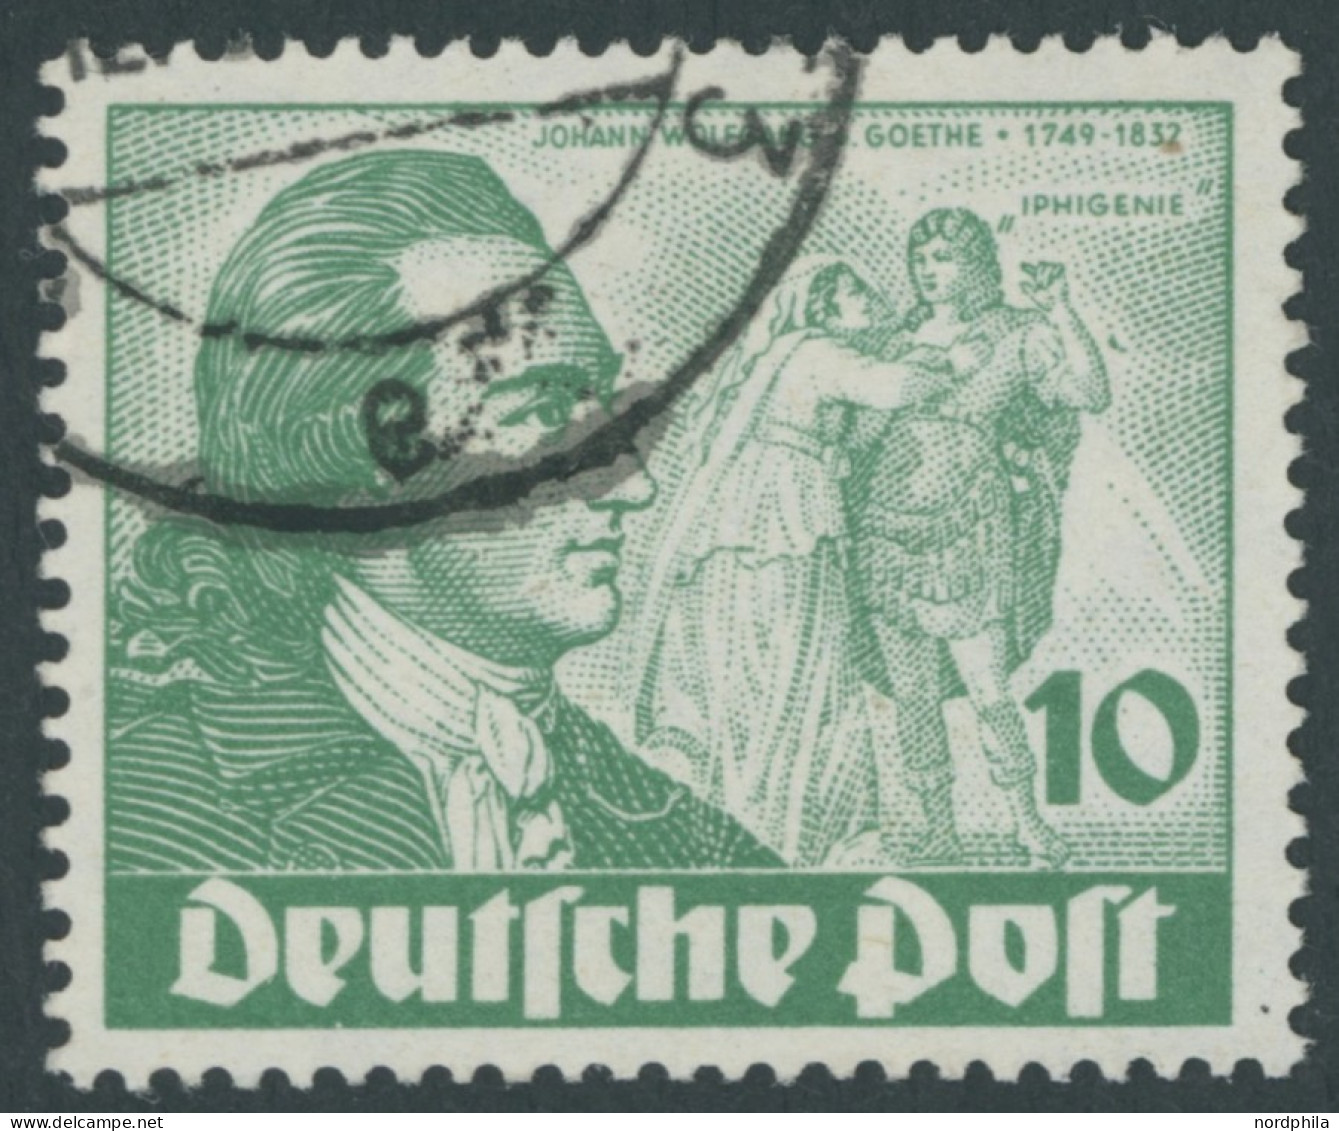 BERLIN 61I O, 1949, 10 Pf. Goethe Mit Abart Farbfleck Neben Rechtem Unterarm Des Darstellers, Pracht, Mi. 150.- - Used Stamps